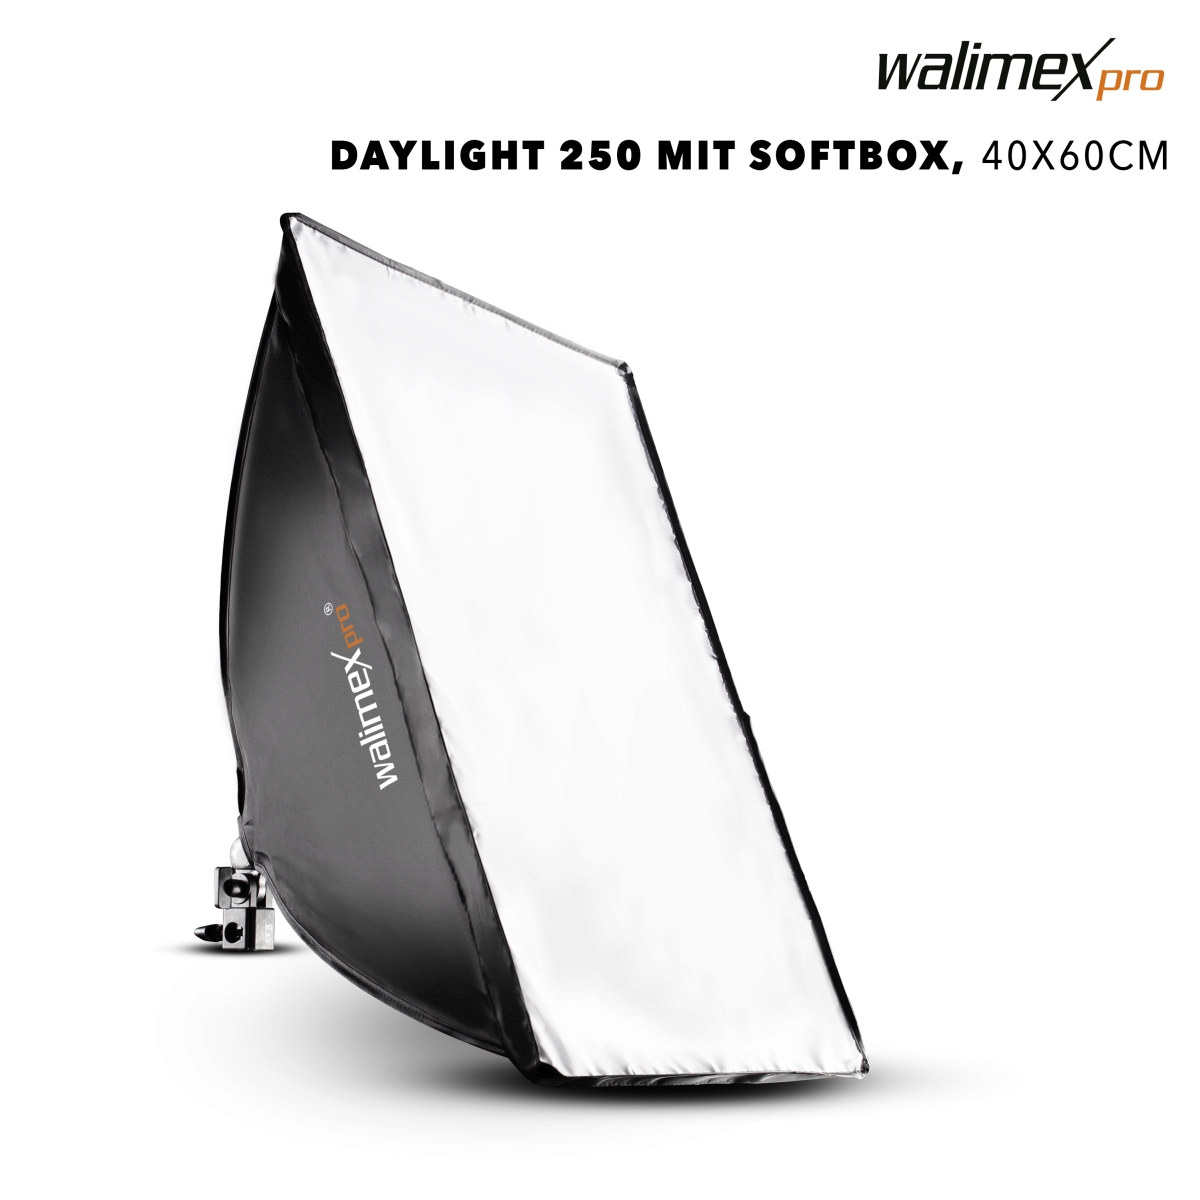 Walimex pro Daylight 250 Softbox 40x60cm